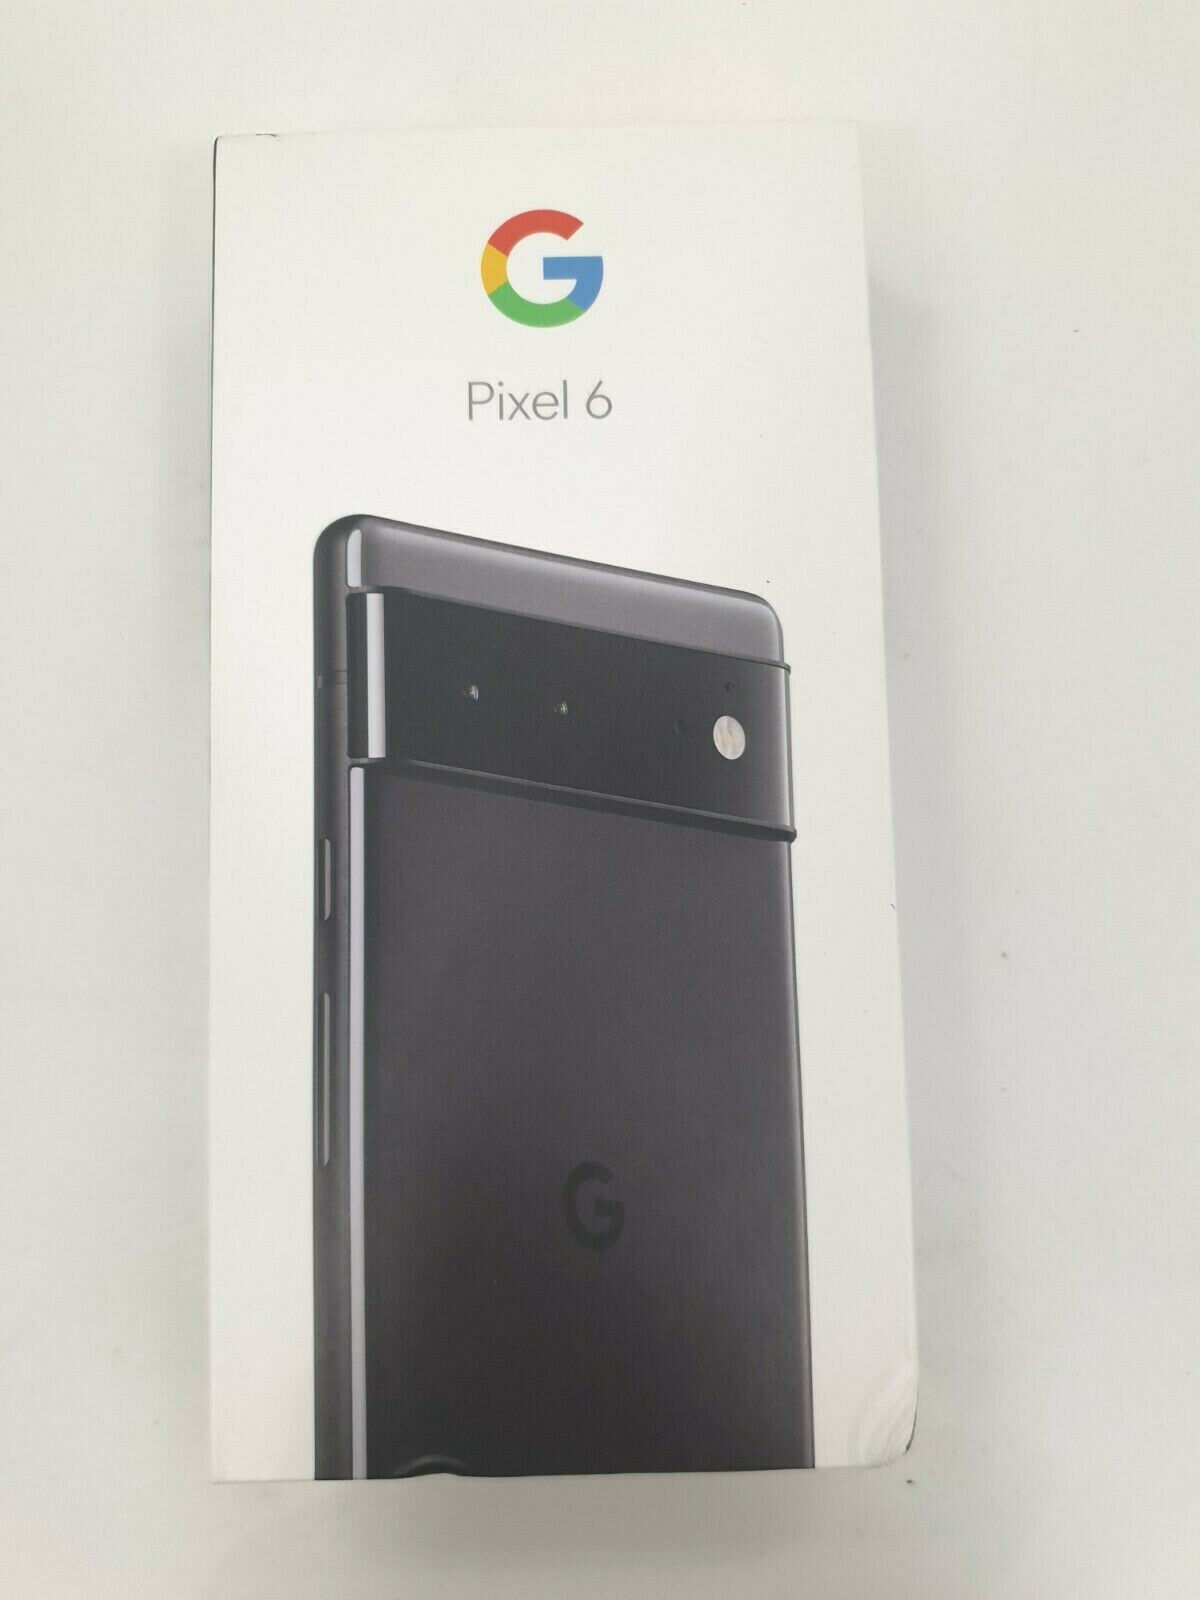 The Price of Google Pixel 6 G9S9B Black 128GB AT&T Clean IMEI Open Box -LR4426 Google Pixel Phone